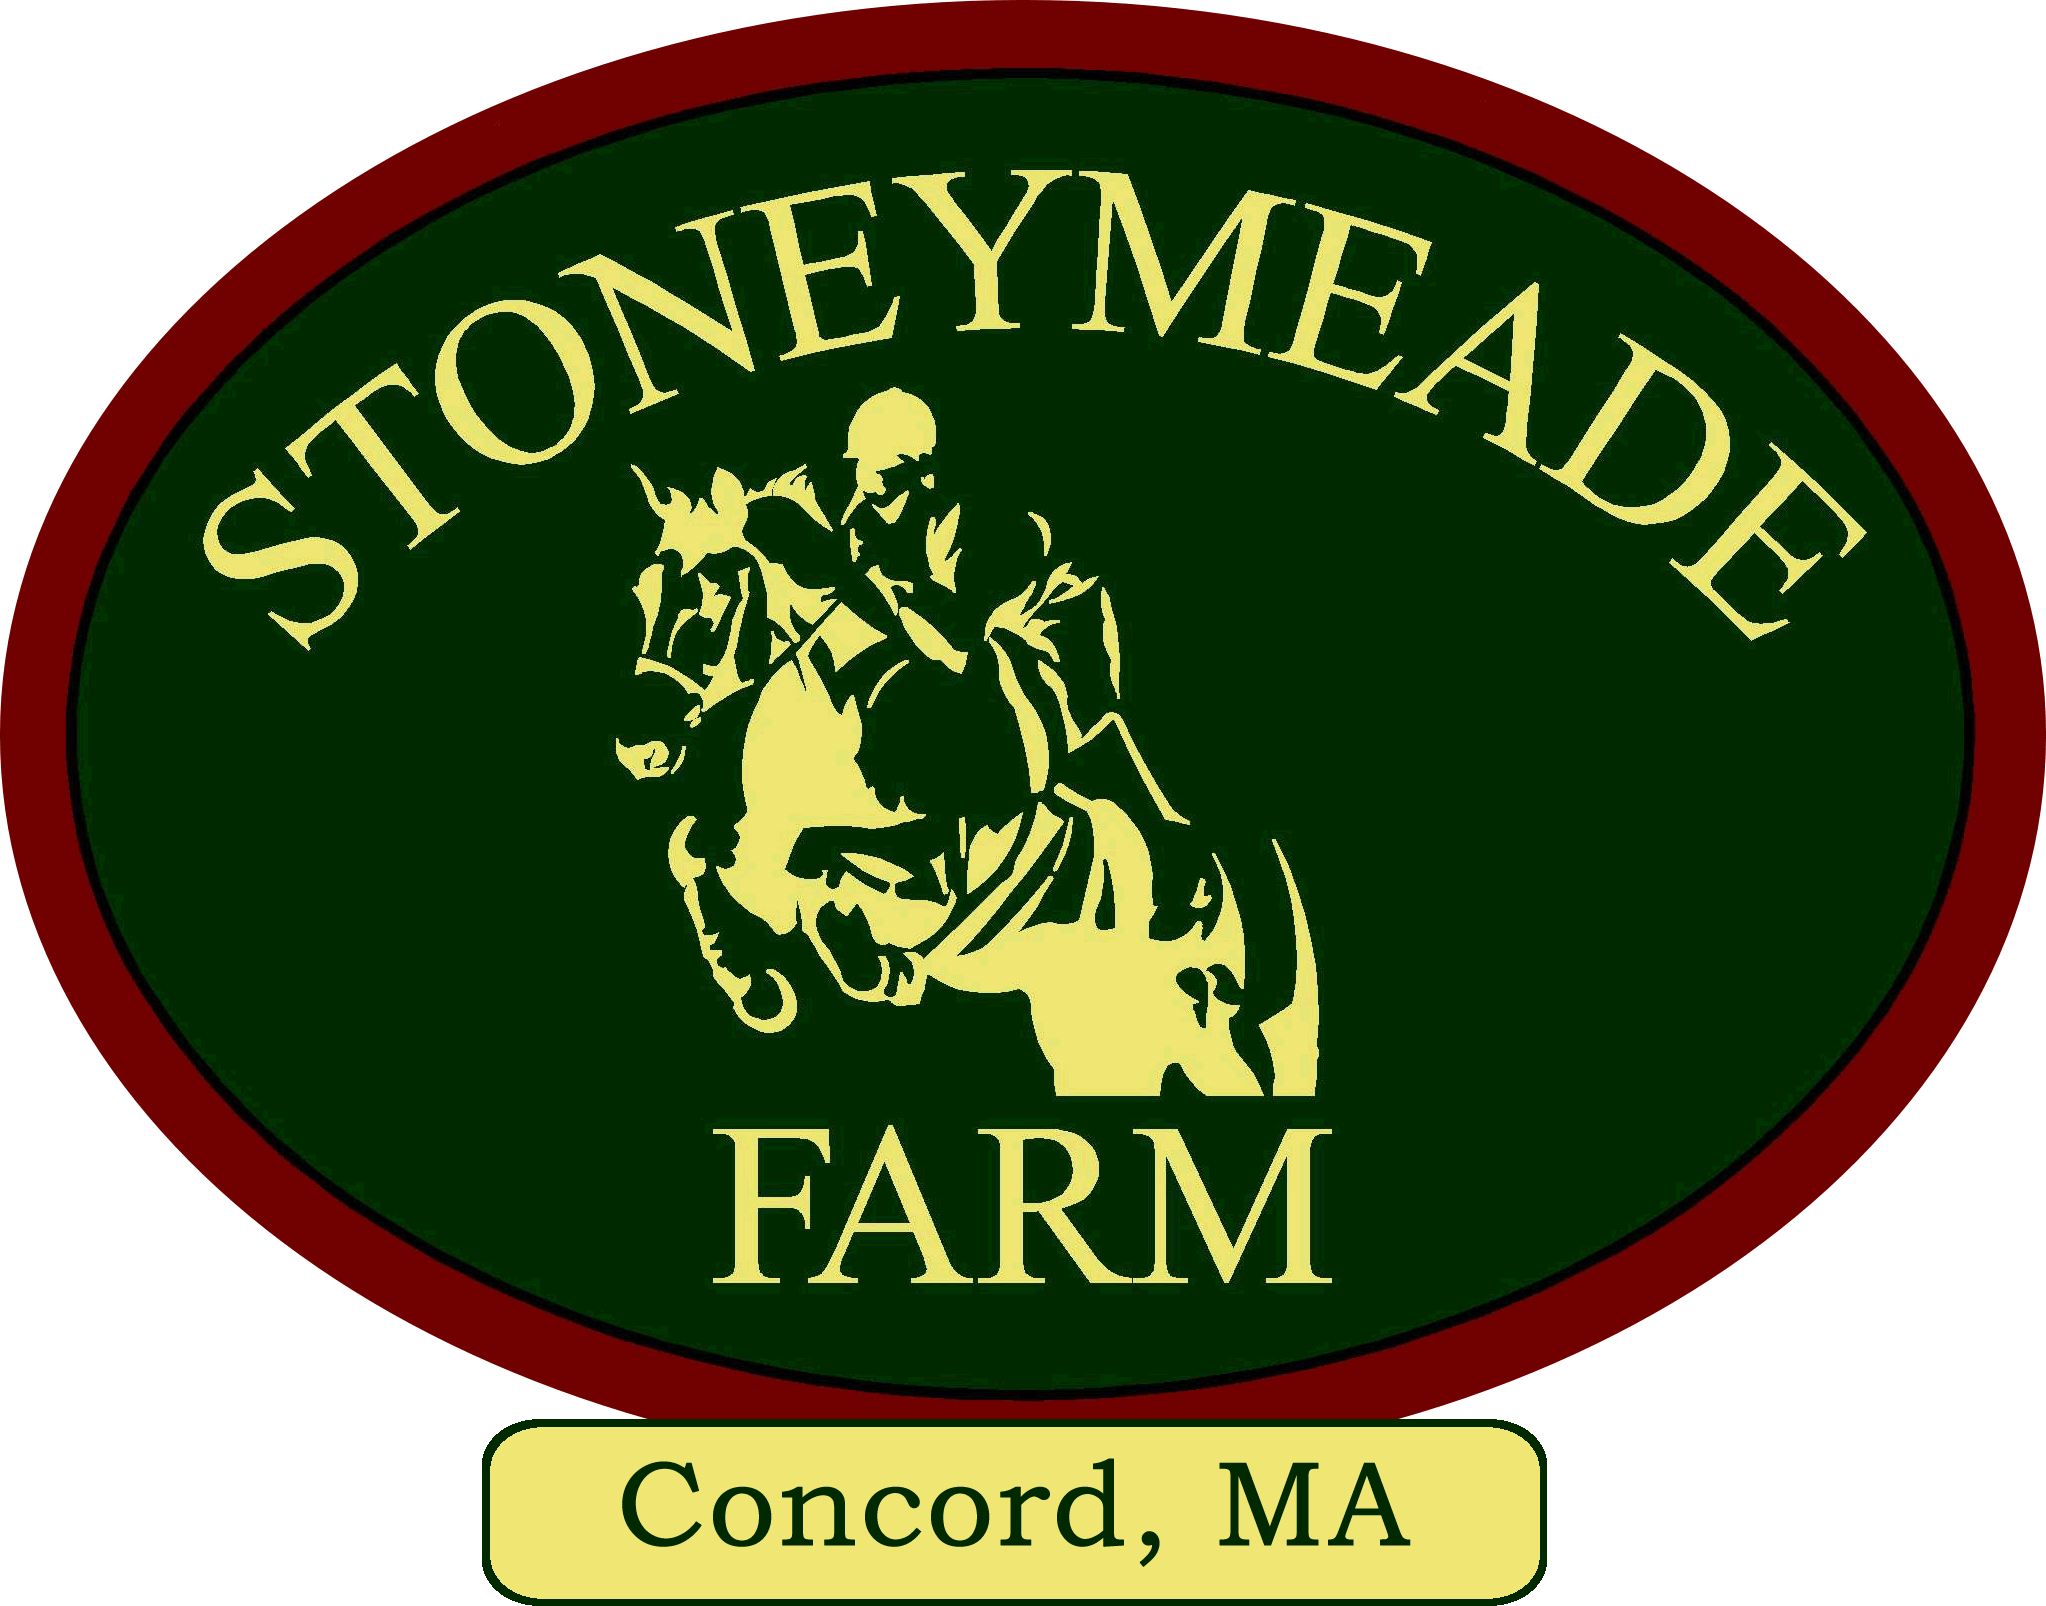 Stoneymeade Farm logo